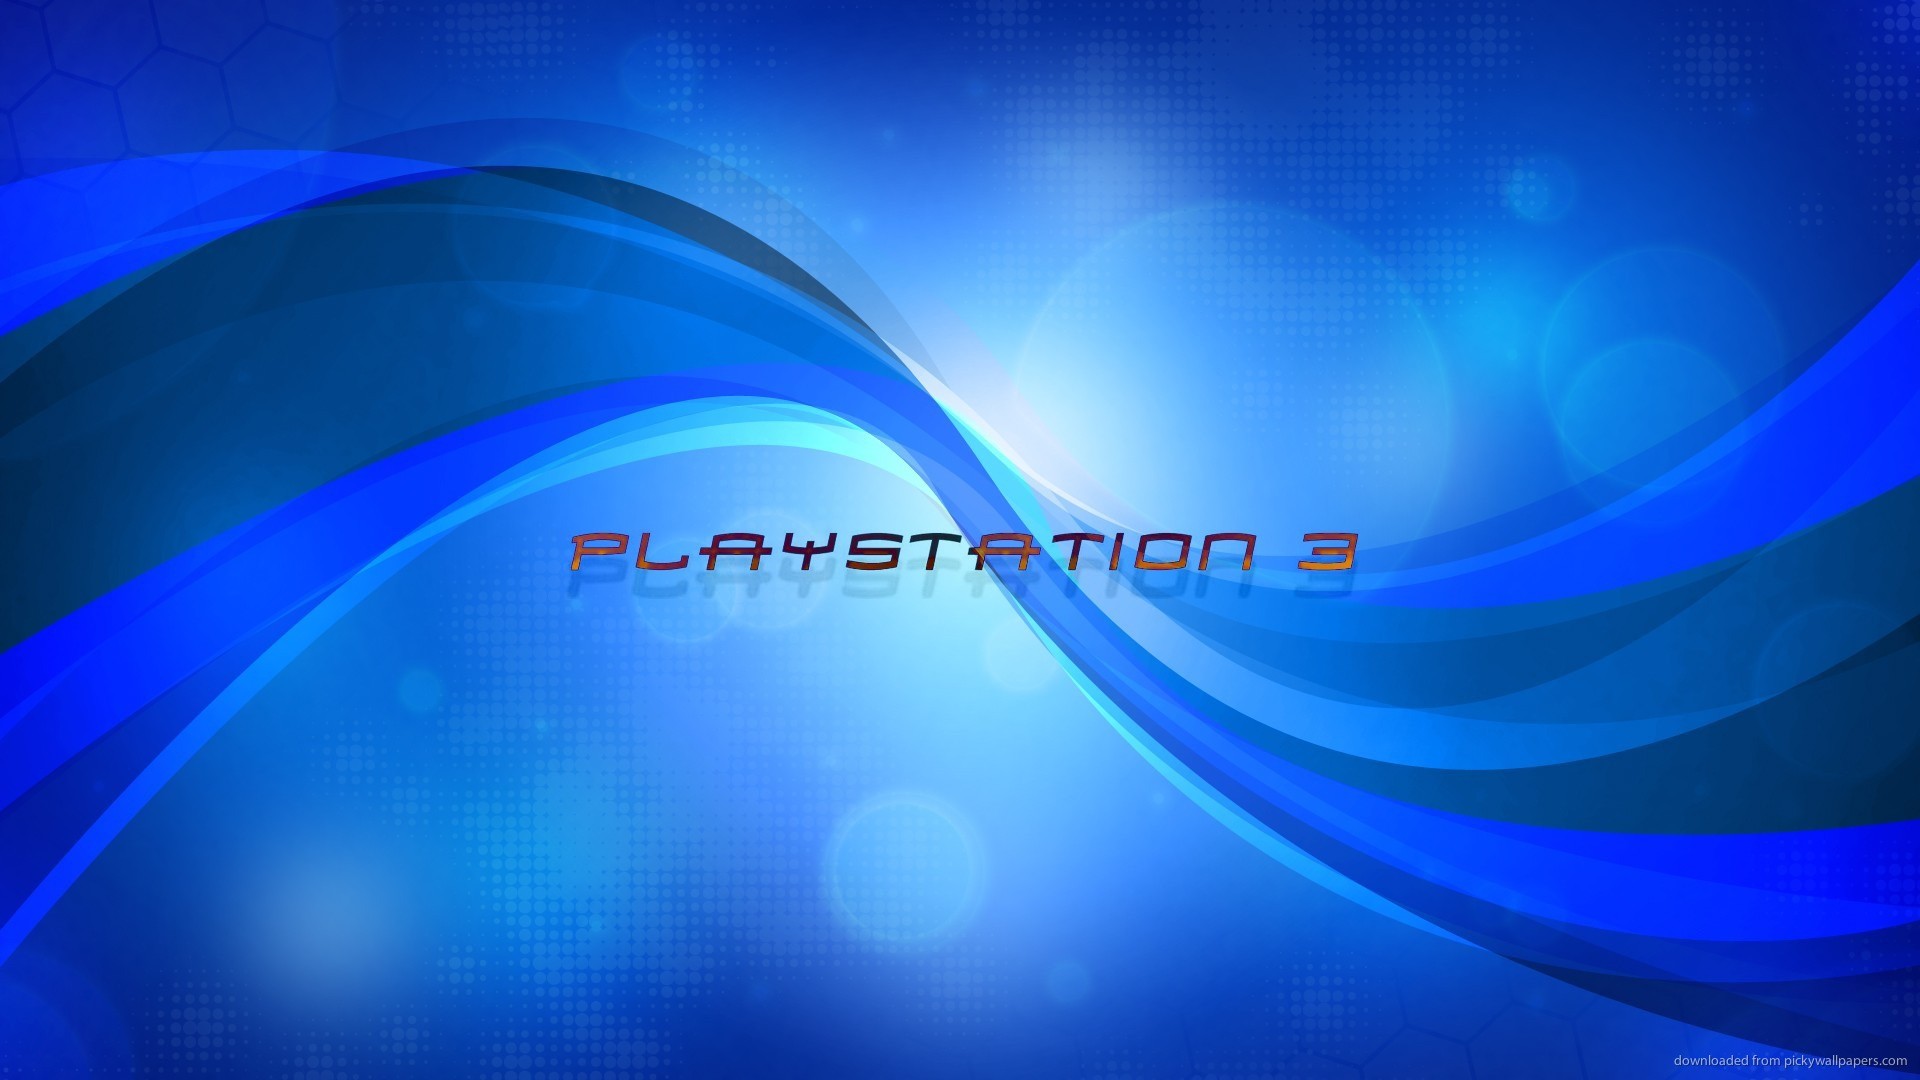 1920x1080 Playstation 3 blue logo for 